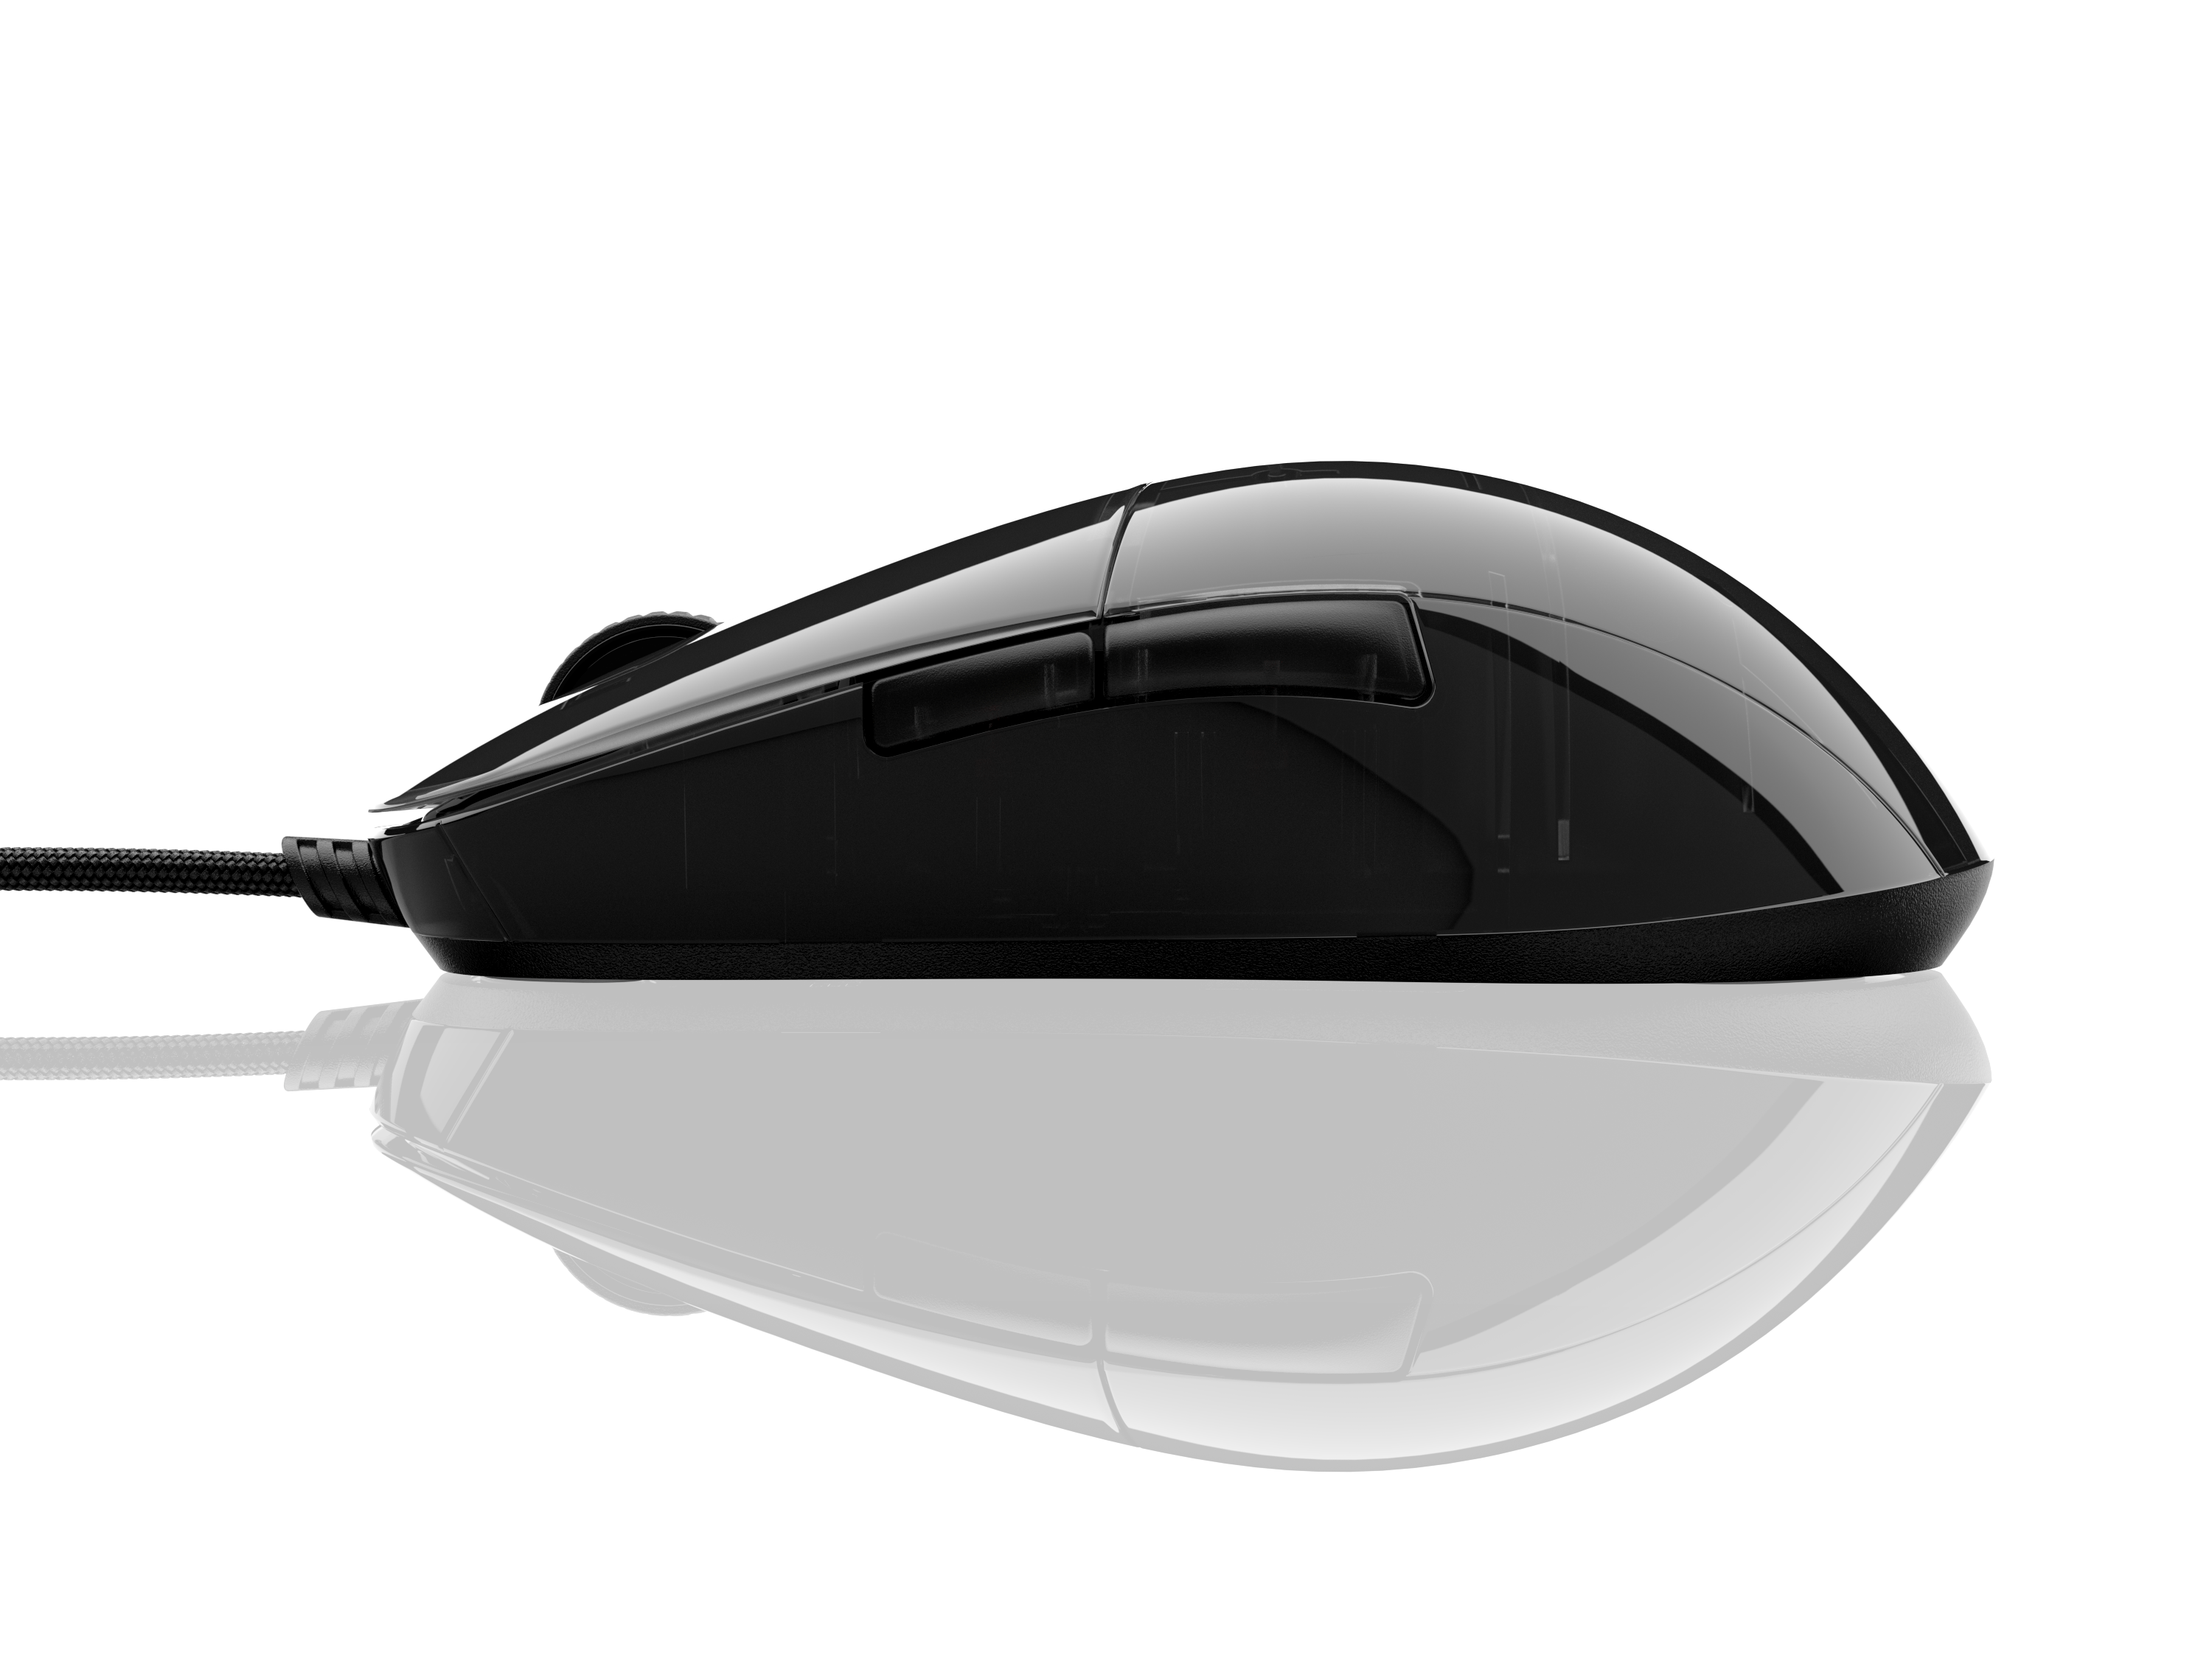 Endgamegear - XM1r Gaming Mouse - Dark Reflex